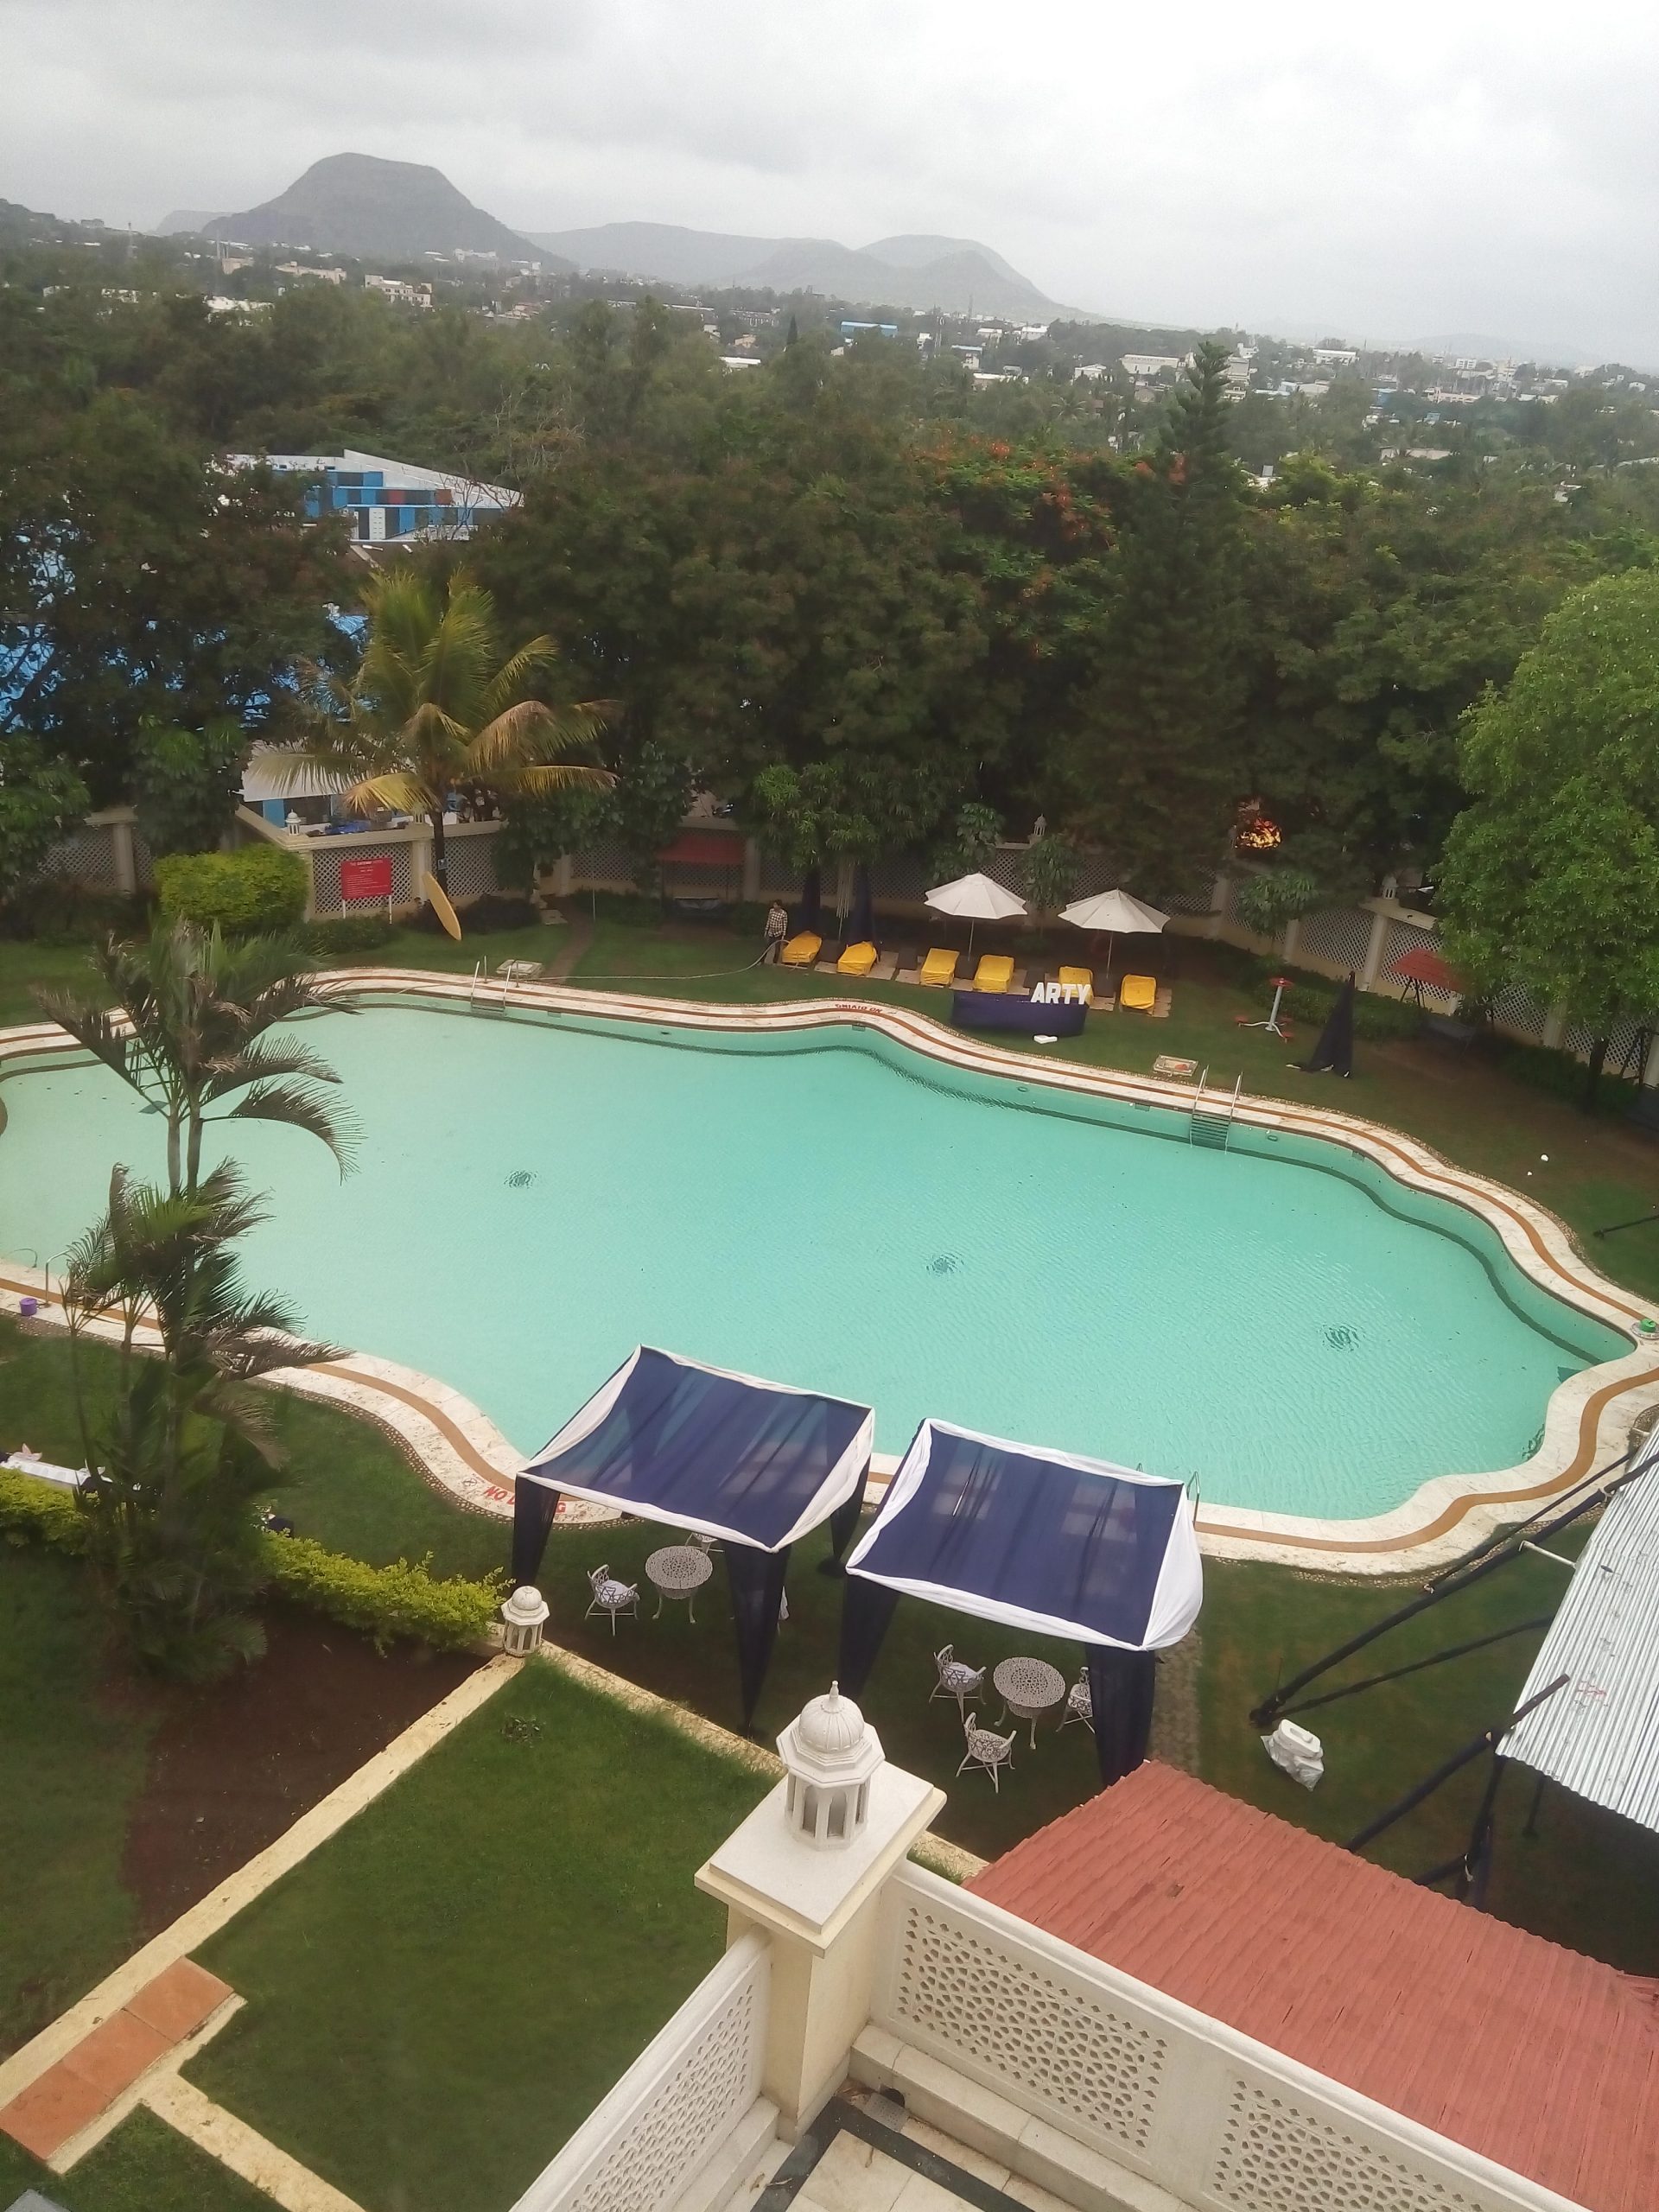 Swimming pool in a resort